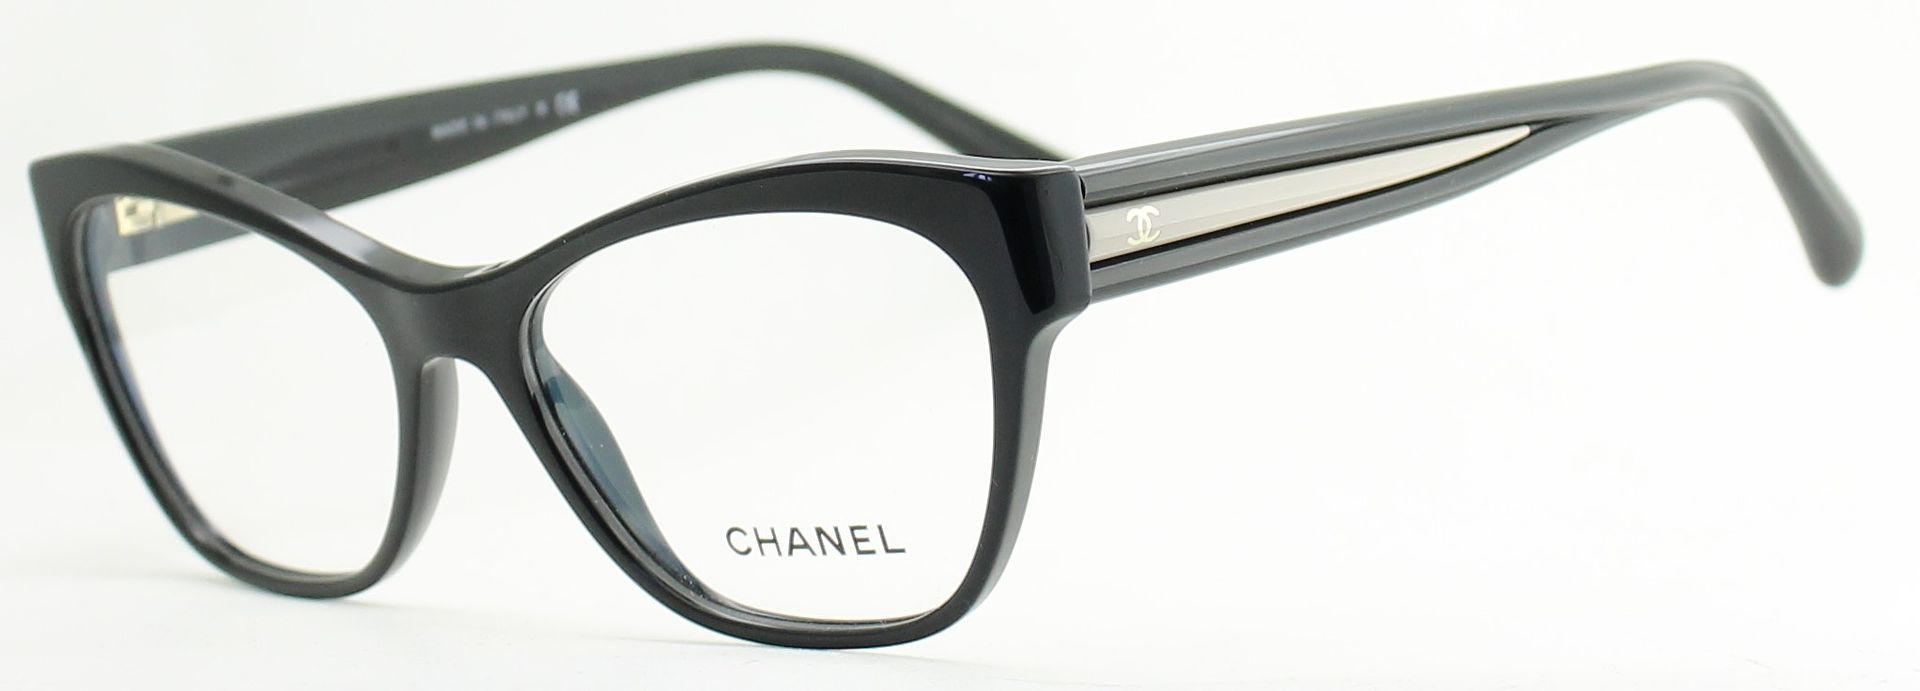 CHANEL 3307 943 Eyewear FRAMES Eyeglasses RX Optical Glasses New